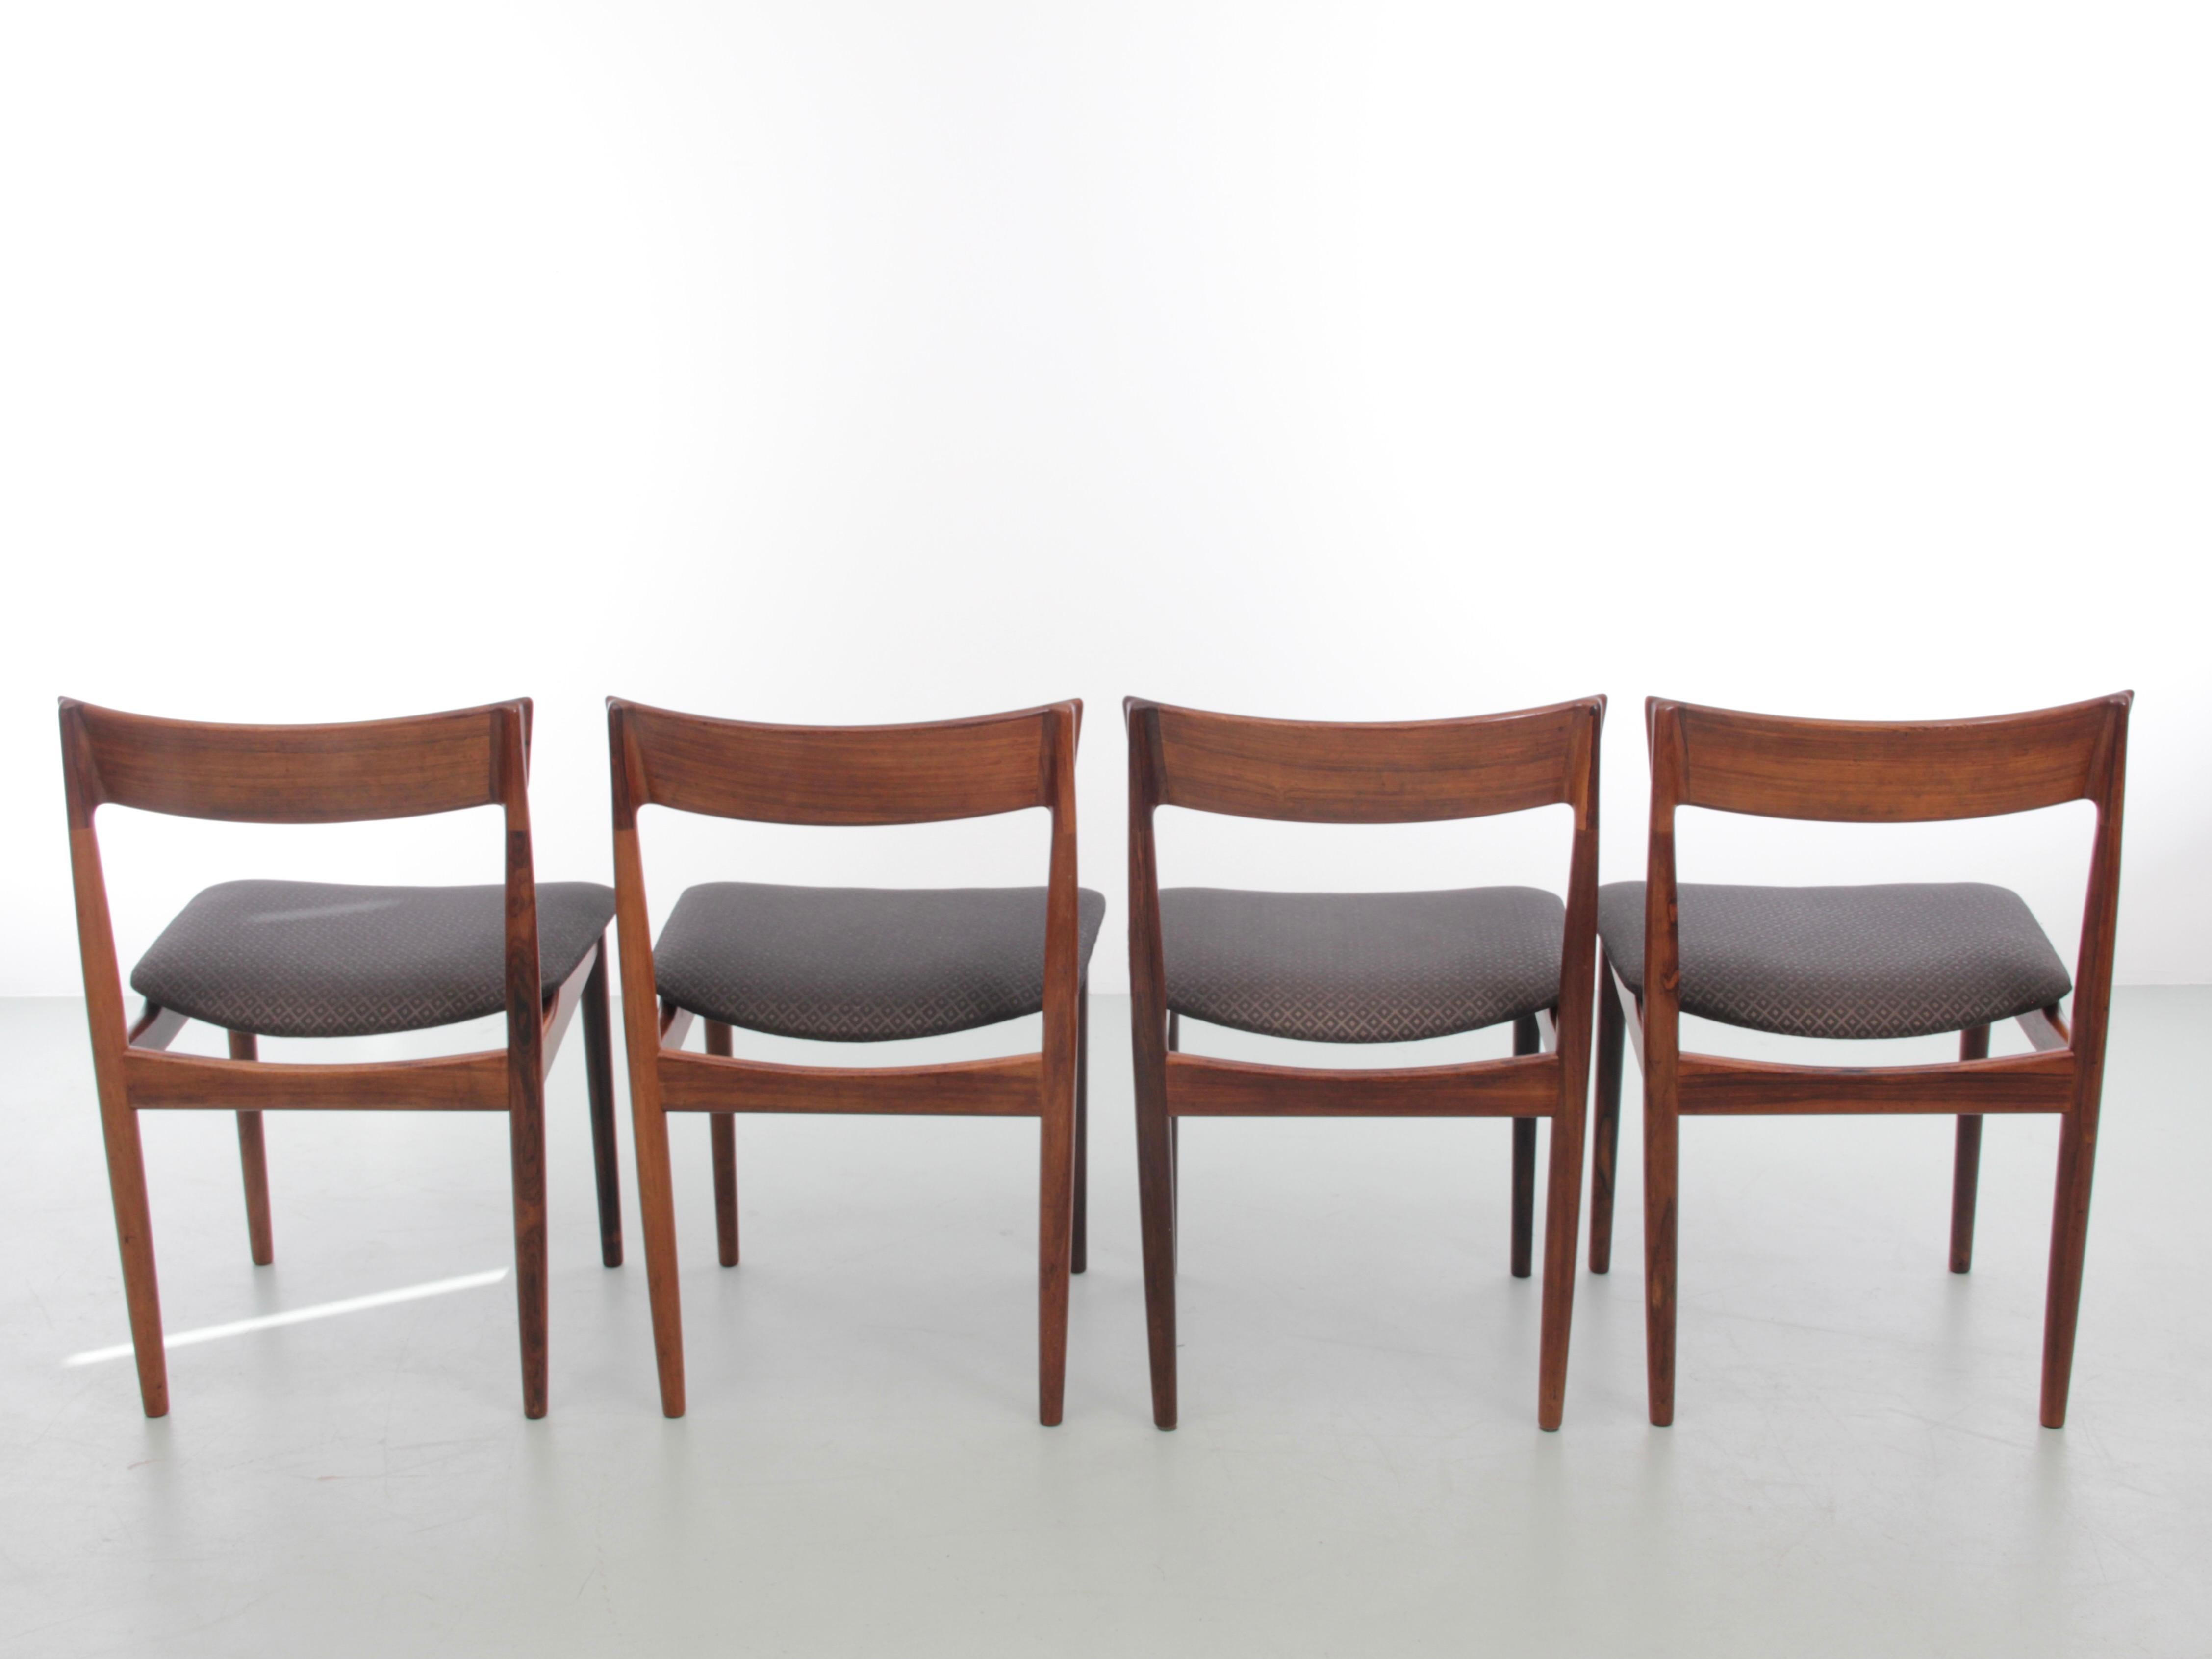 Mid-Century Modern Scandinavian set of 4 chairs in solid teak by Harry Rosengren Hansen for Brande Møbelindustri. Original edition from 1960. Referenced by the Design Museum Danmark under number RP00896. Litterature : Mobilia 1960 & 1961. Original